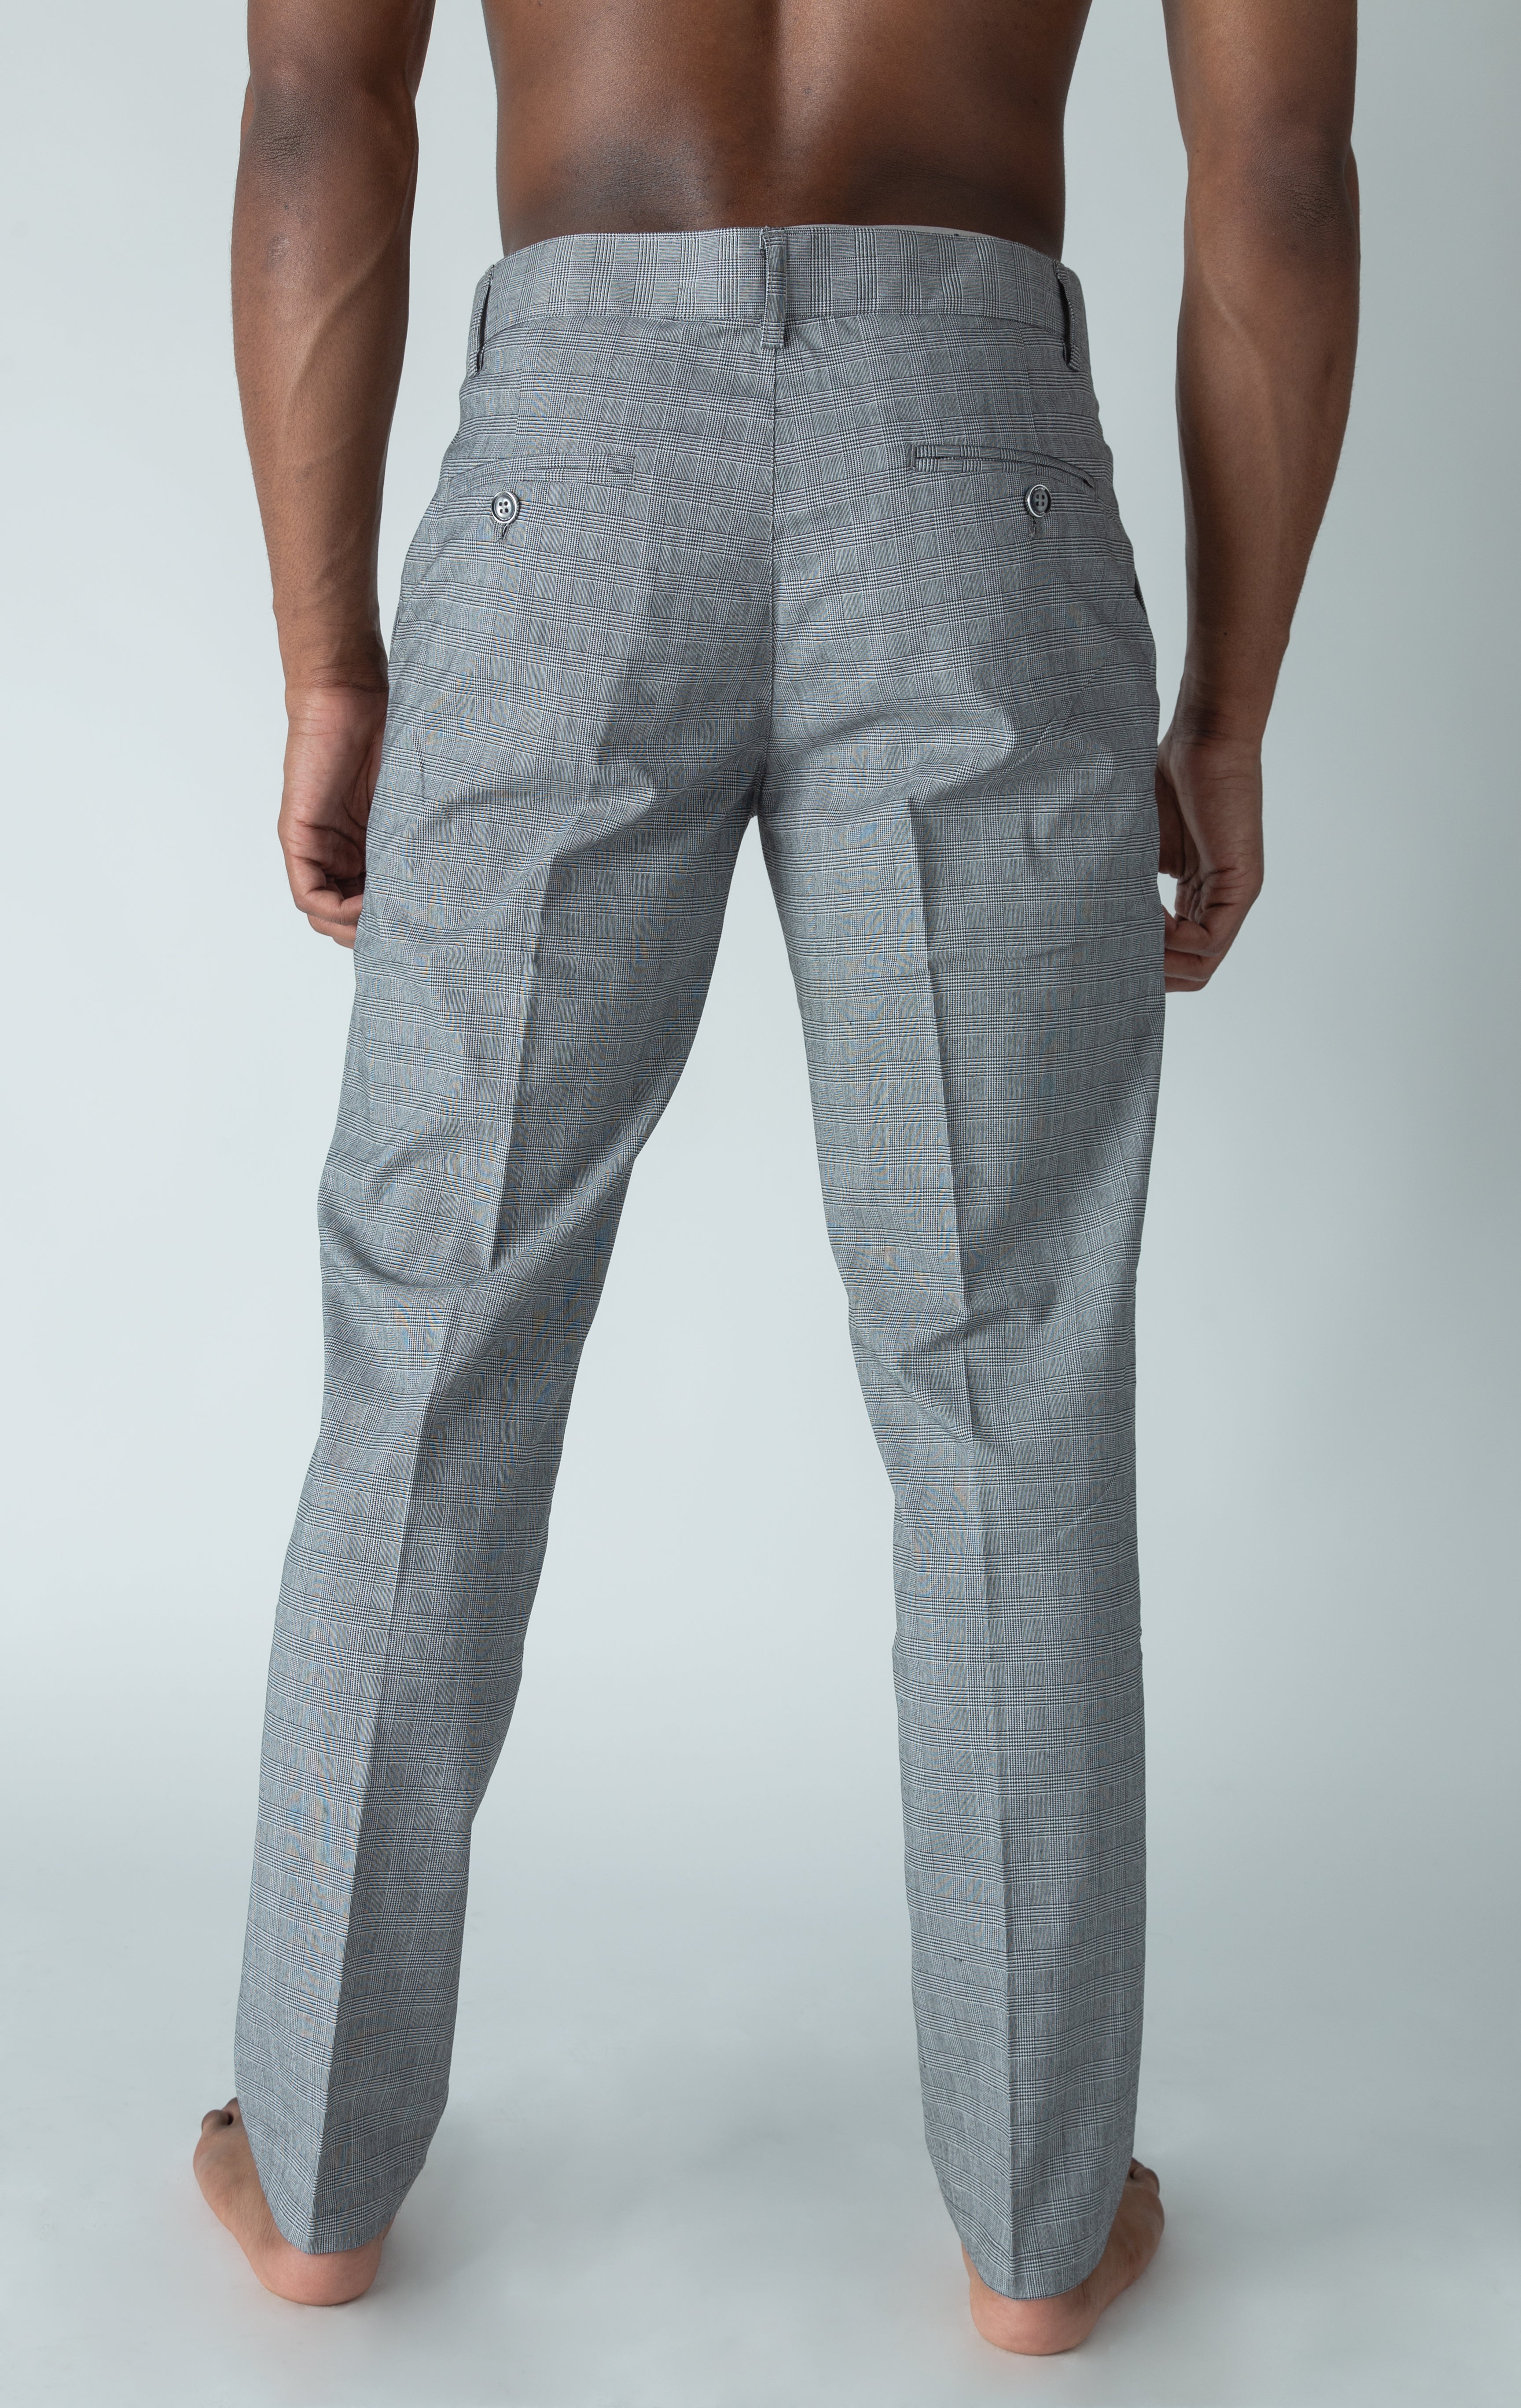 Grey men's plaid dress pants.